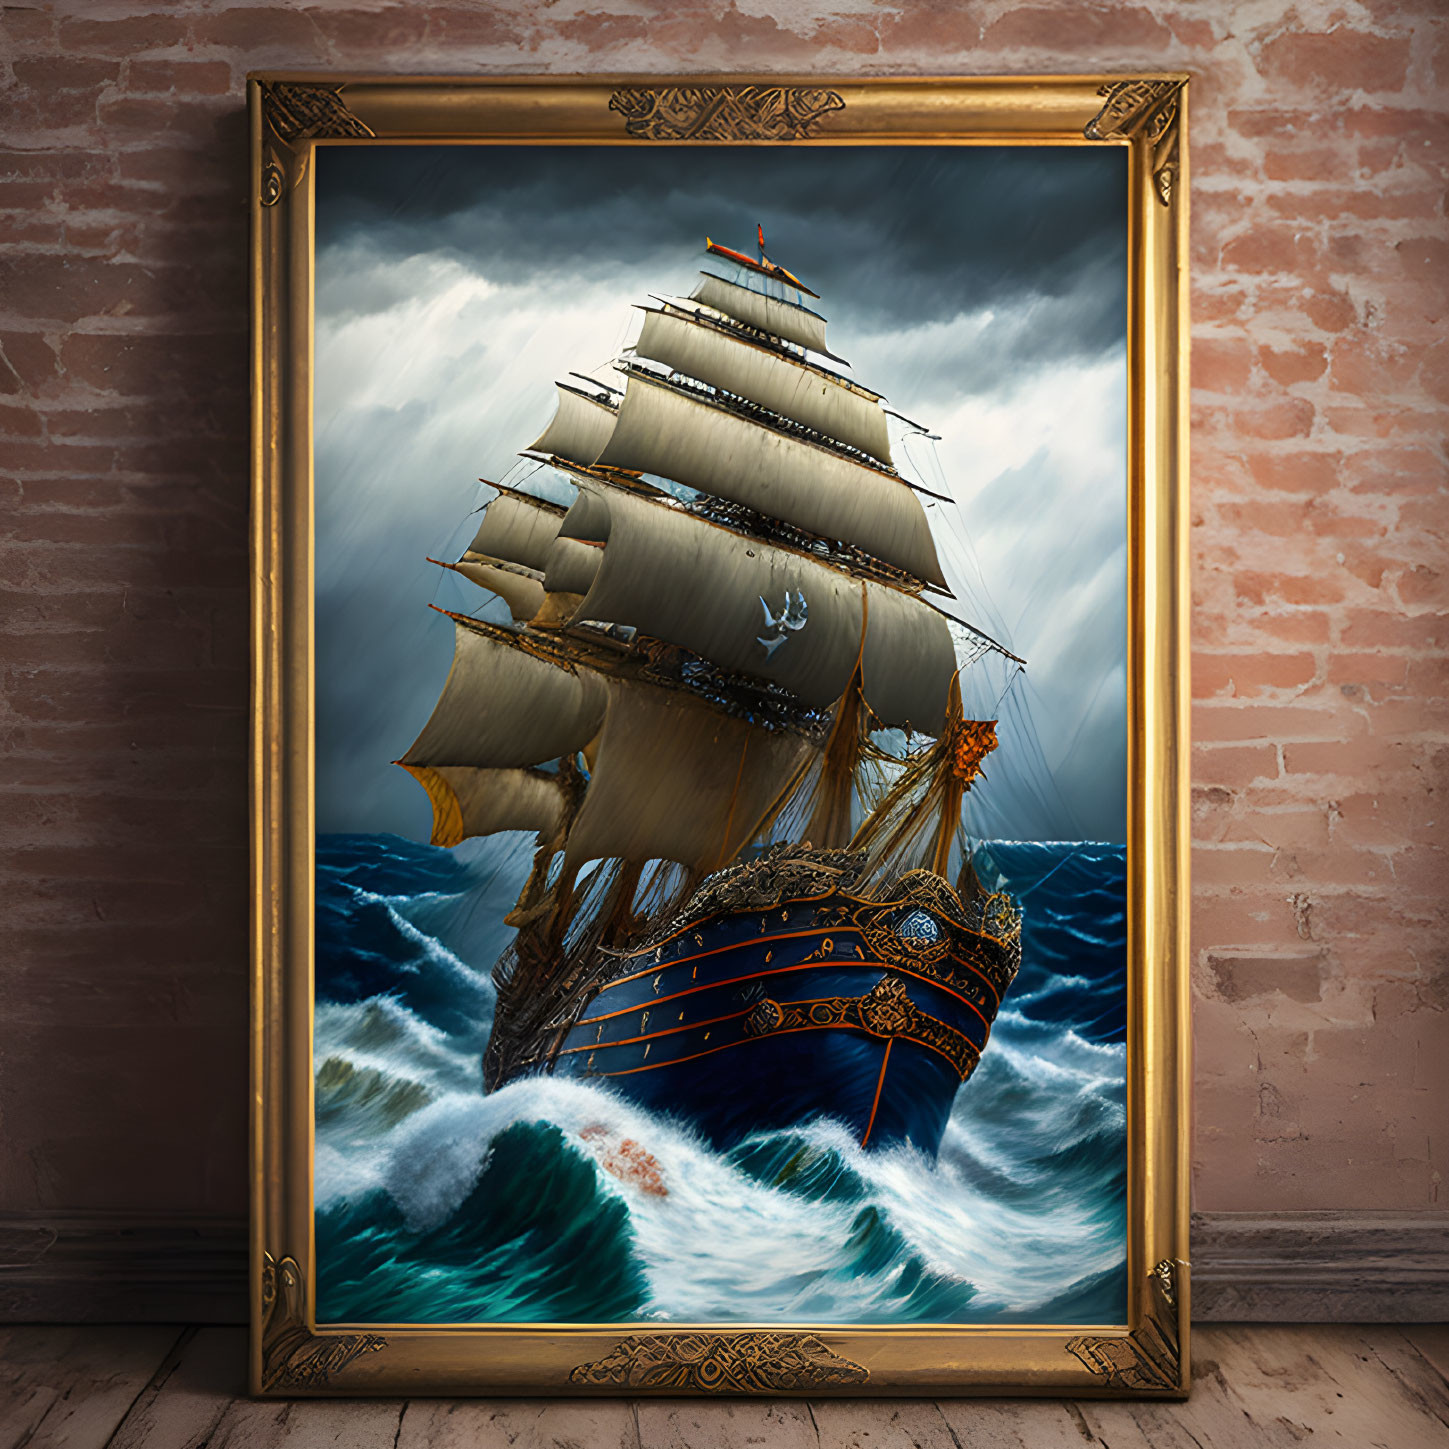 Framed painting of sailing ship on brick wall